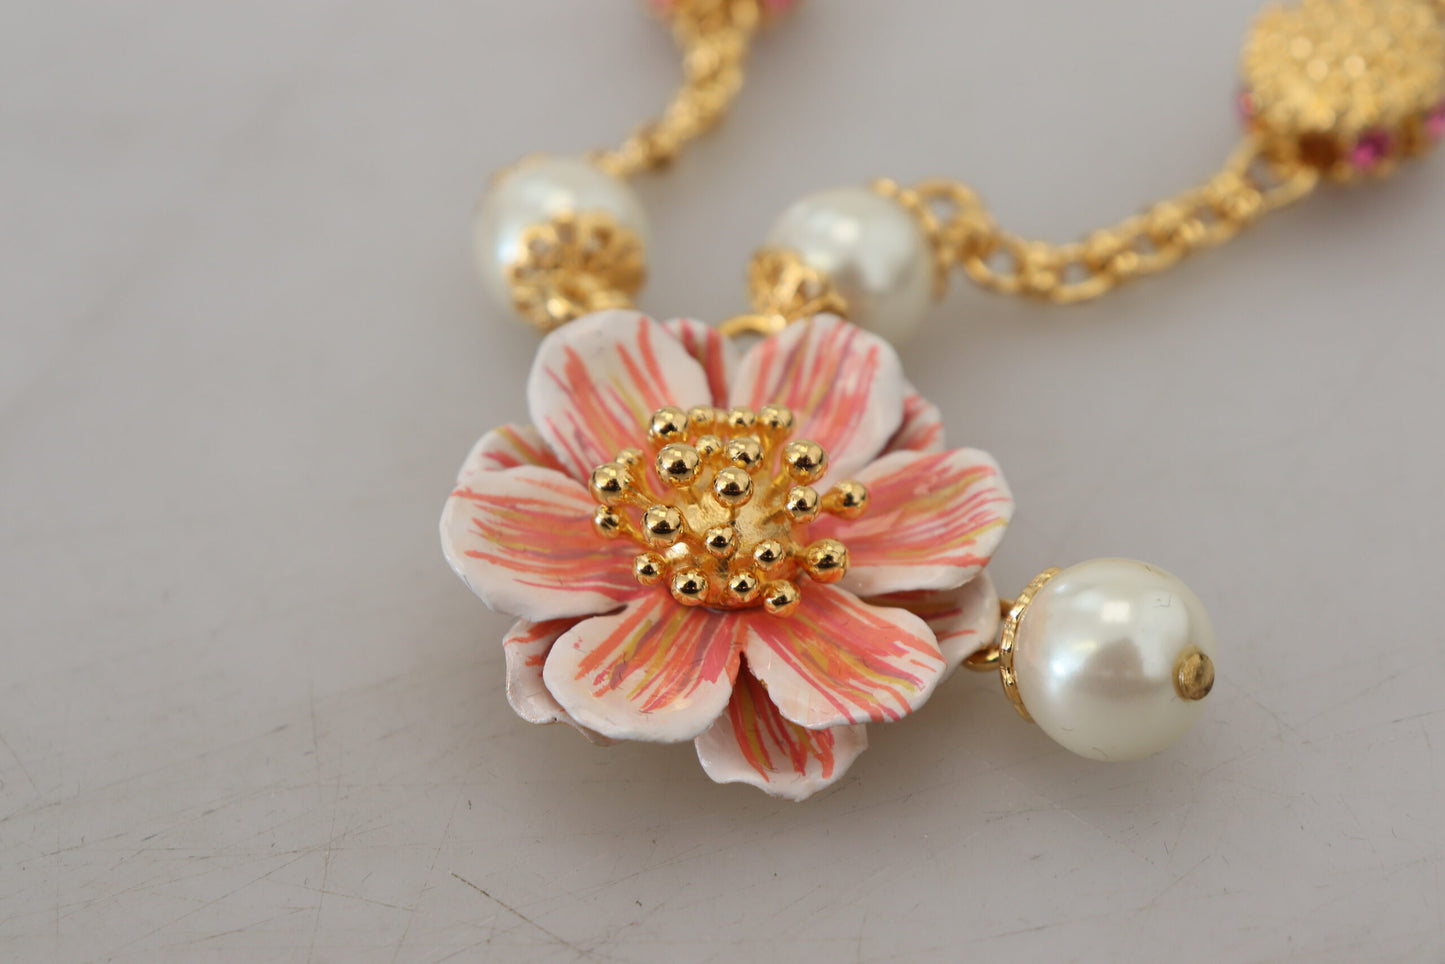 Elegant Floral Statement Charm Necklace